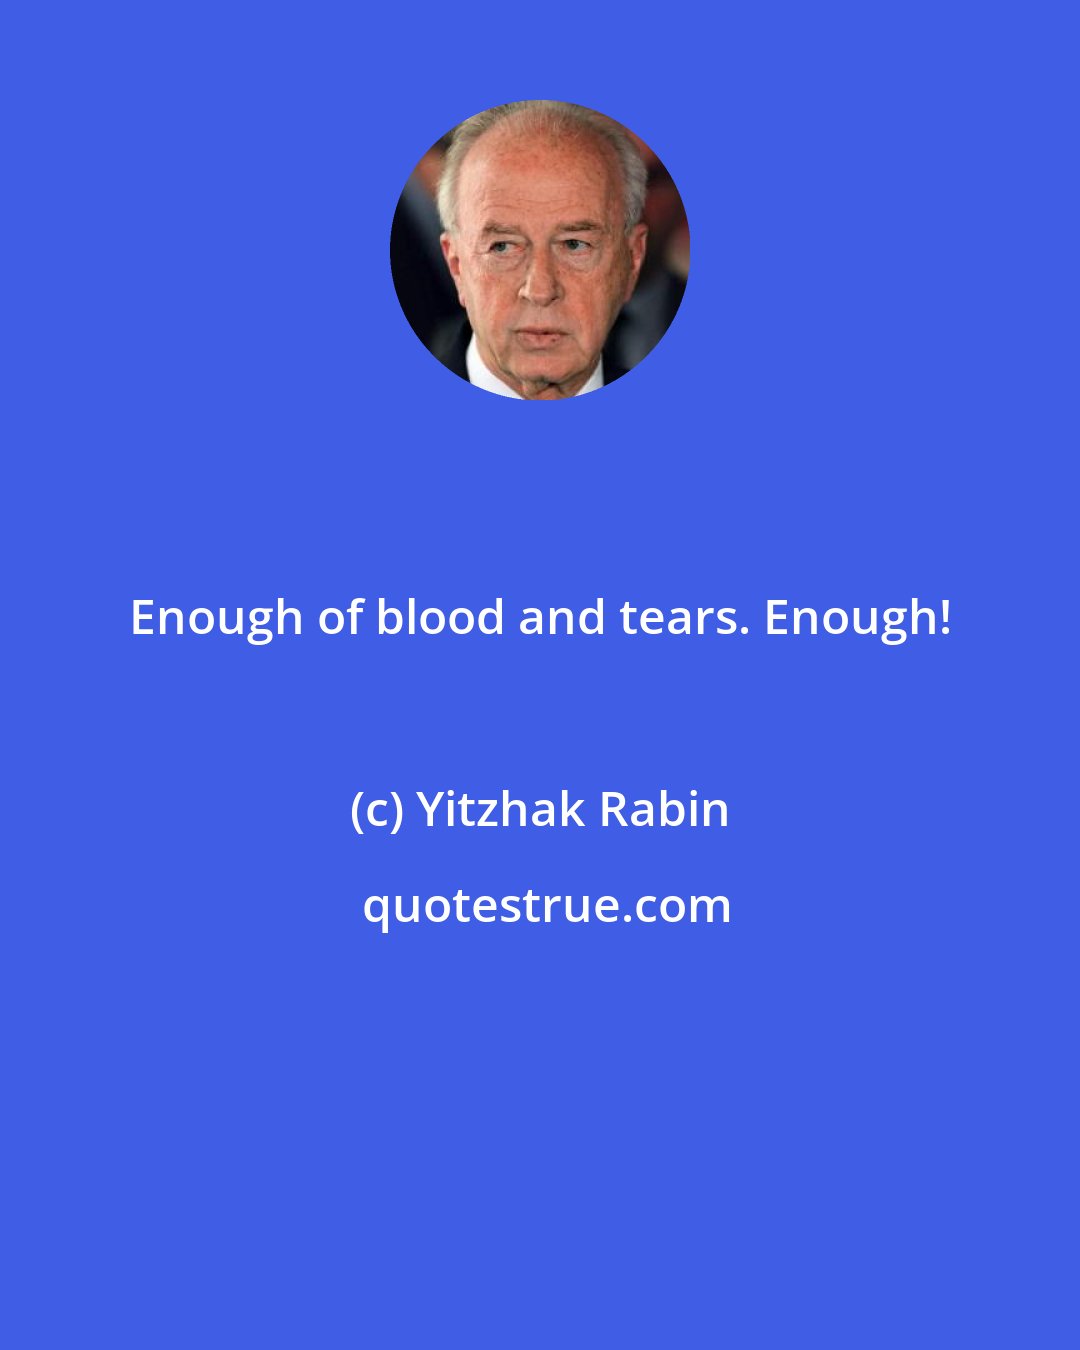 Yitzhak Rabin: Enough of blood and tears. Enough!